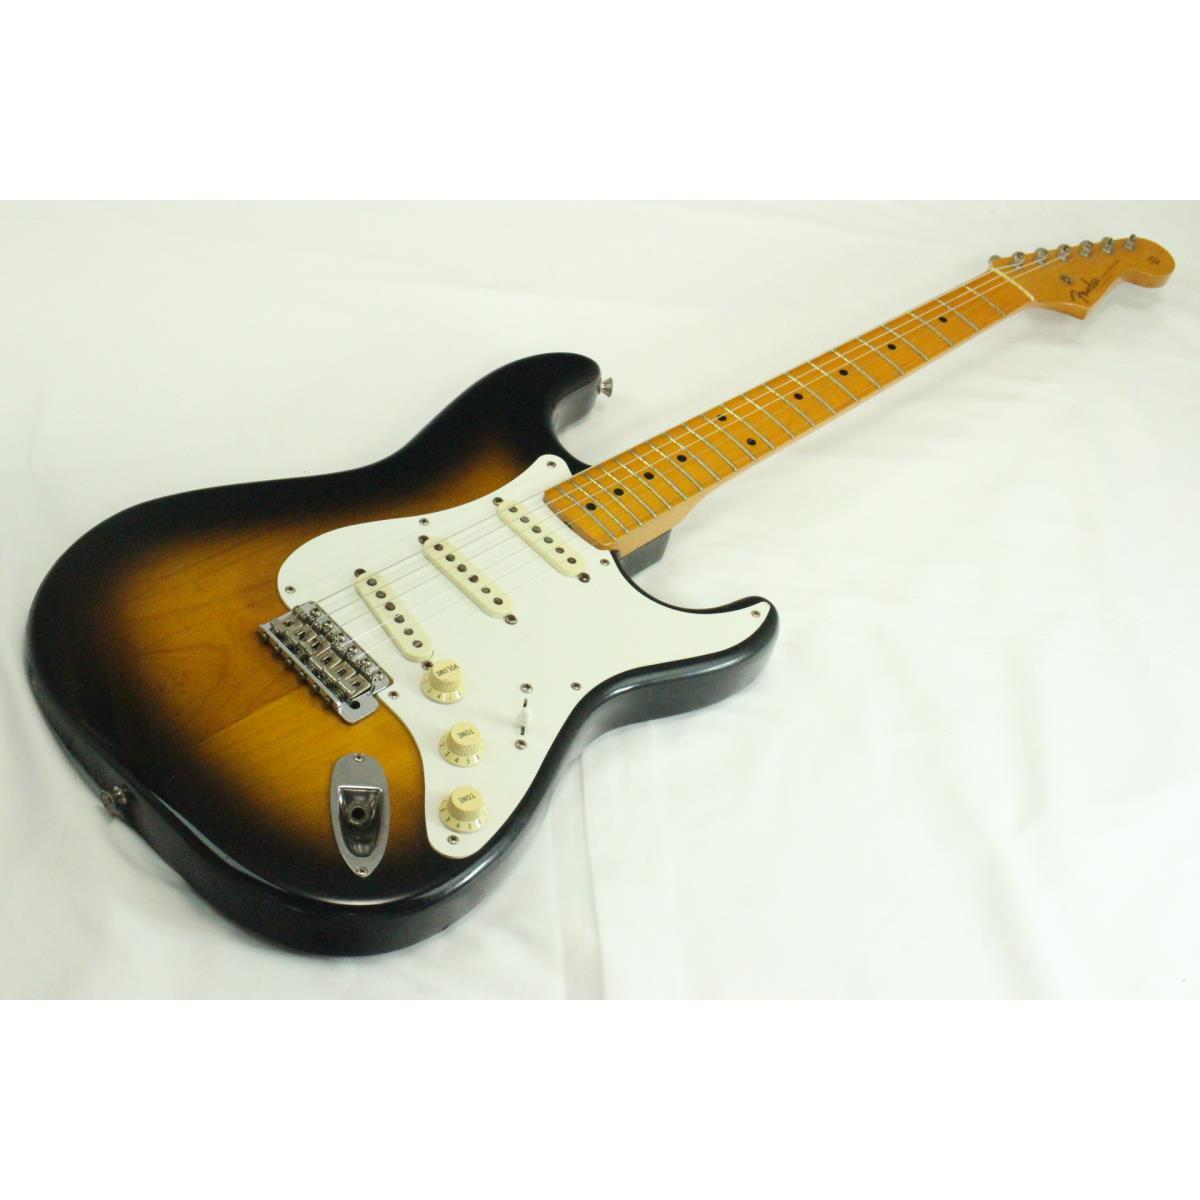 KOMEHYO |FENDER JAPAN ST57-900|Fender Japan|乐器|电吉他|【官方